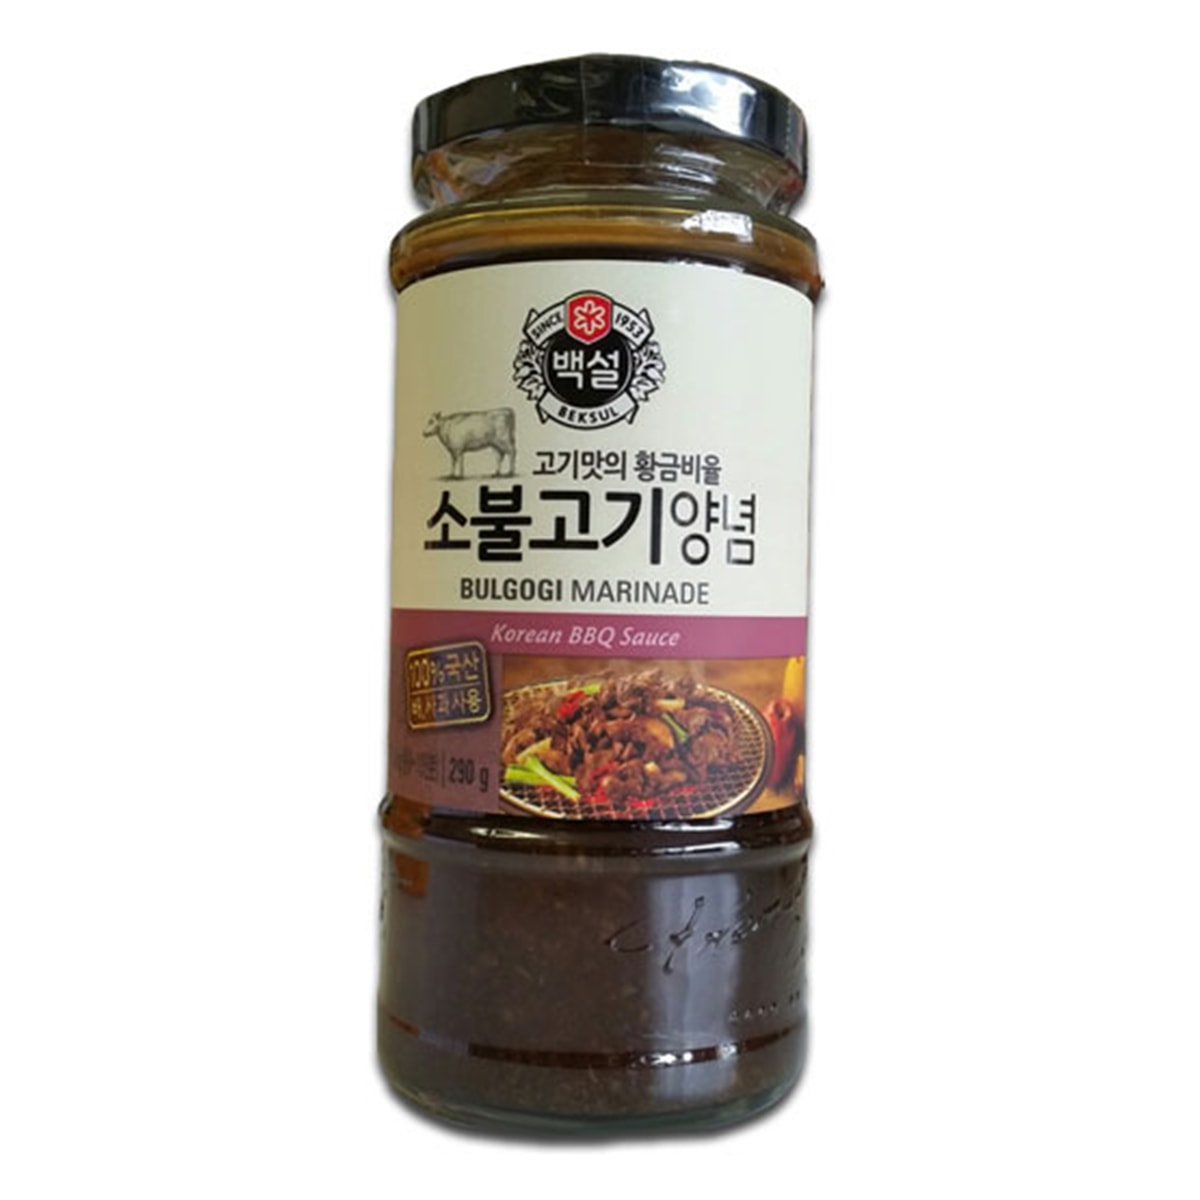 Buy CJ Beksul Beef Bulgogi Marinade (Korean BBQ Sauce) - 290 gm